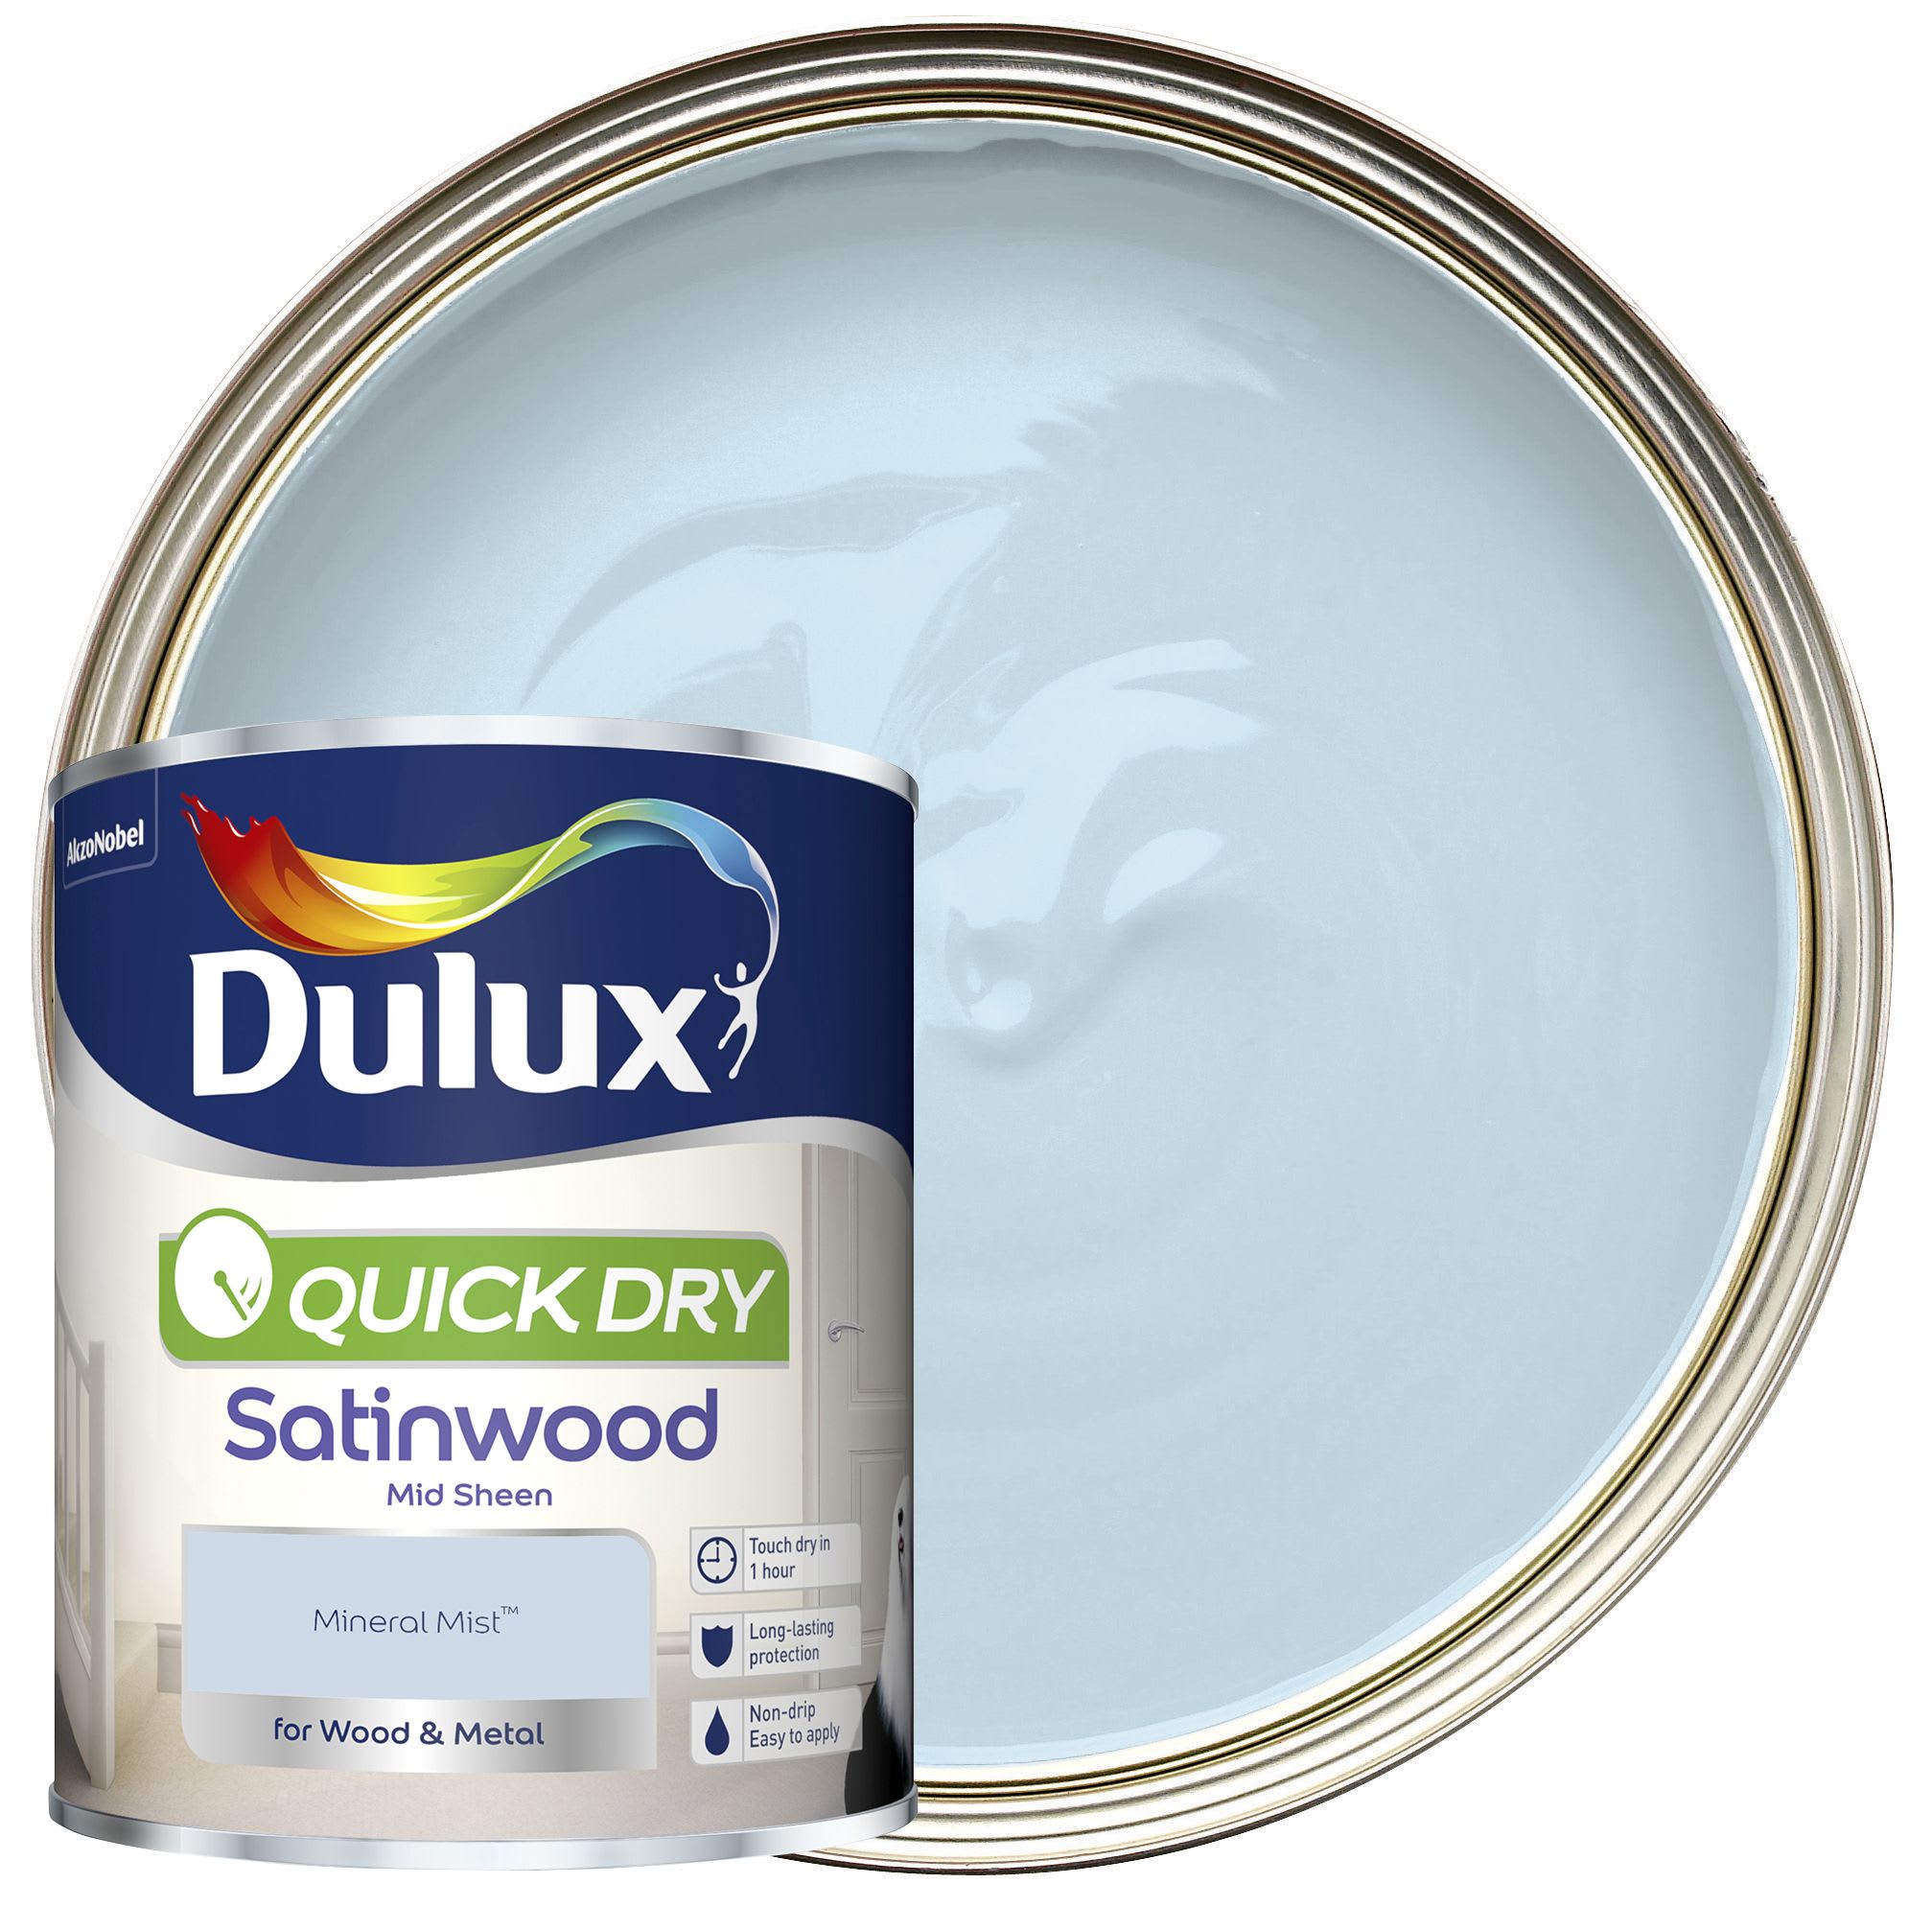 Dulux Quick Dry Satinwood - Mineral Mist -